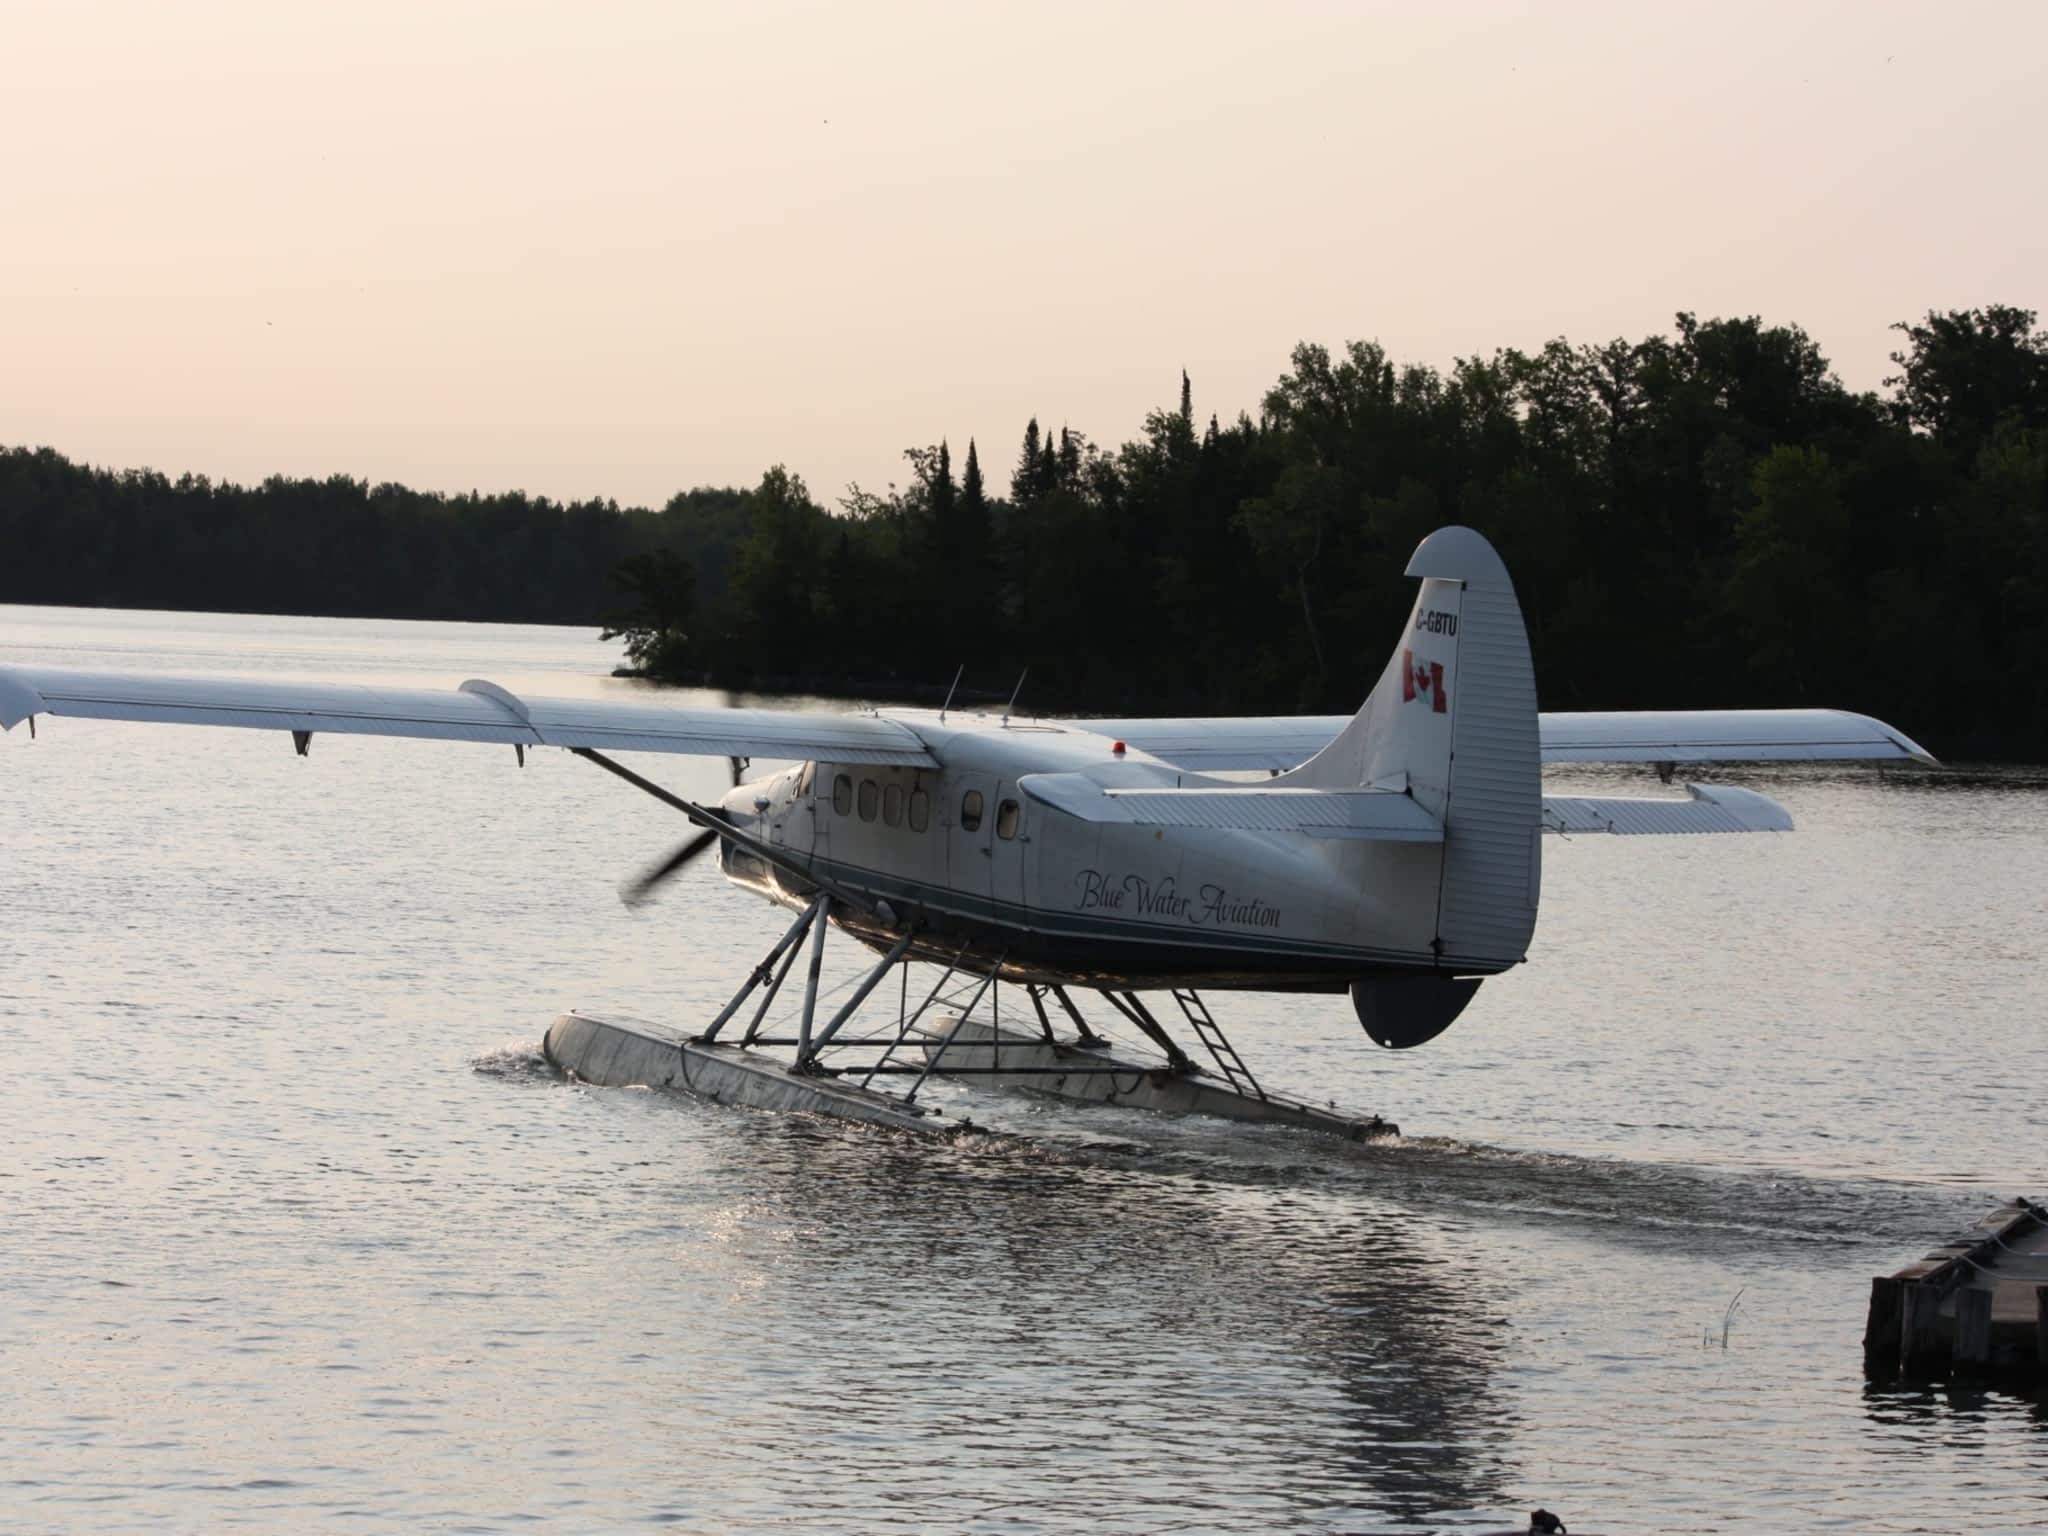 photo Blue Water Aviation